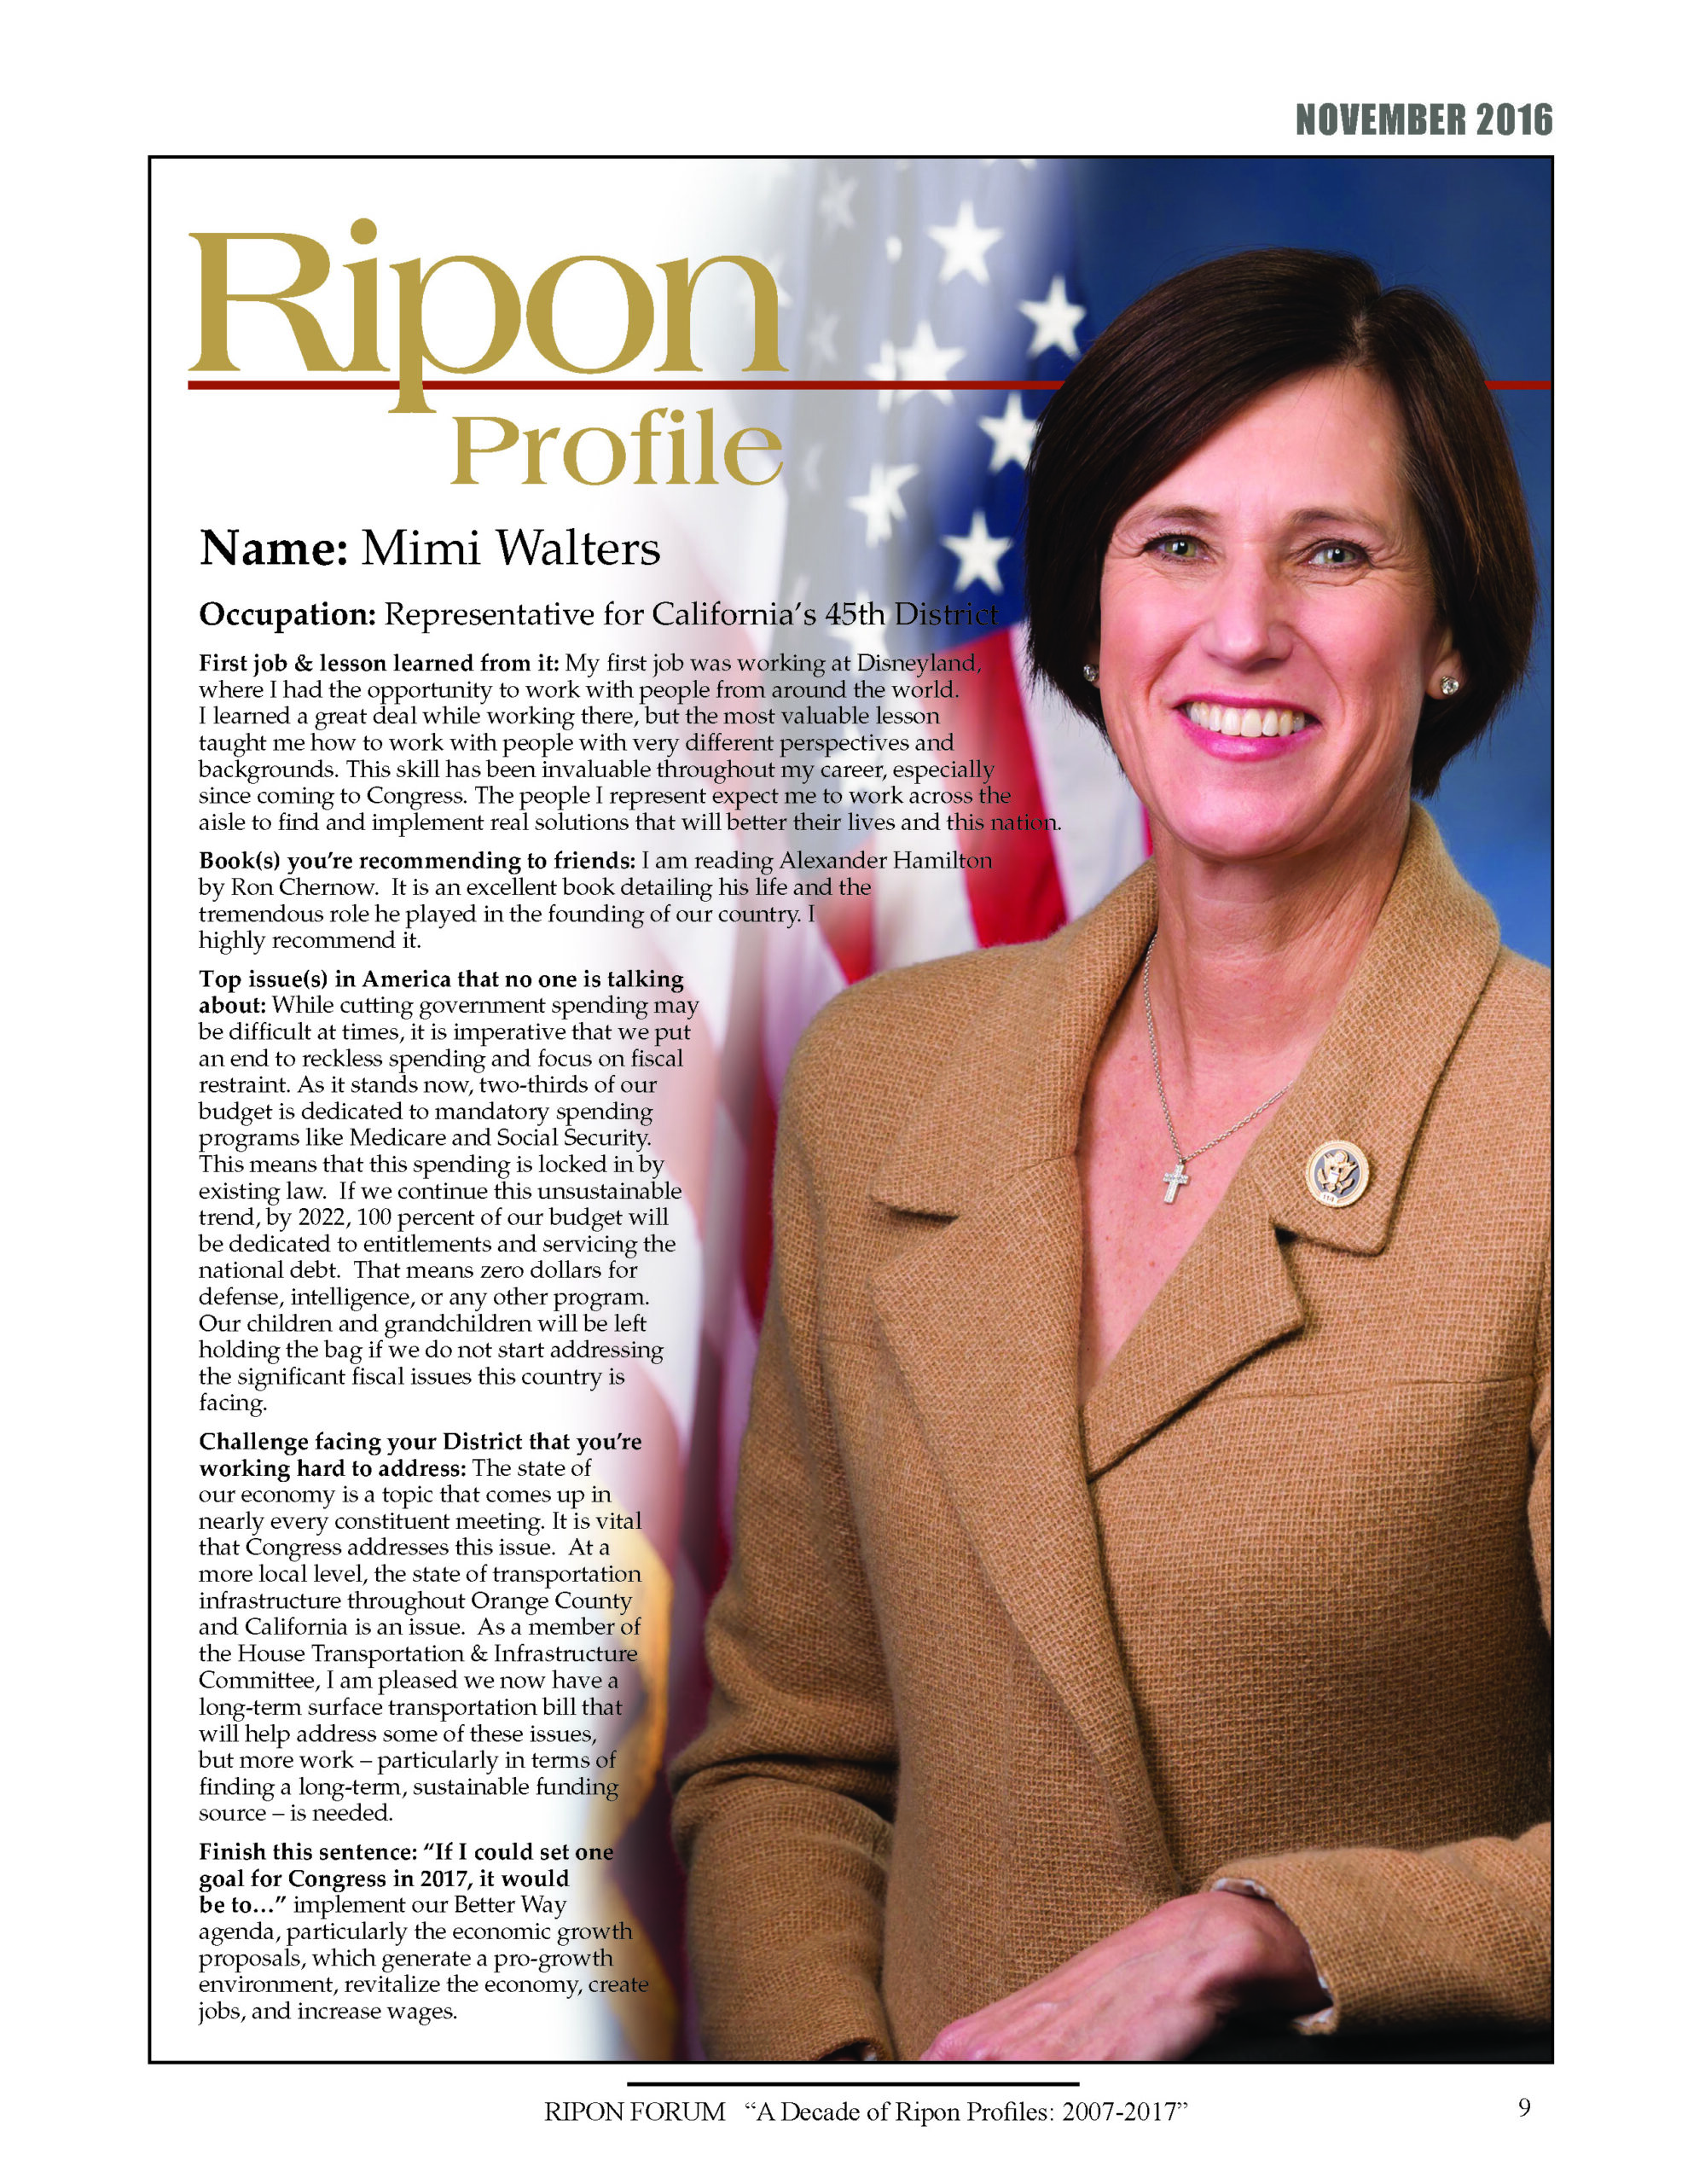 Ripon Profile of Mimi Walters